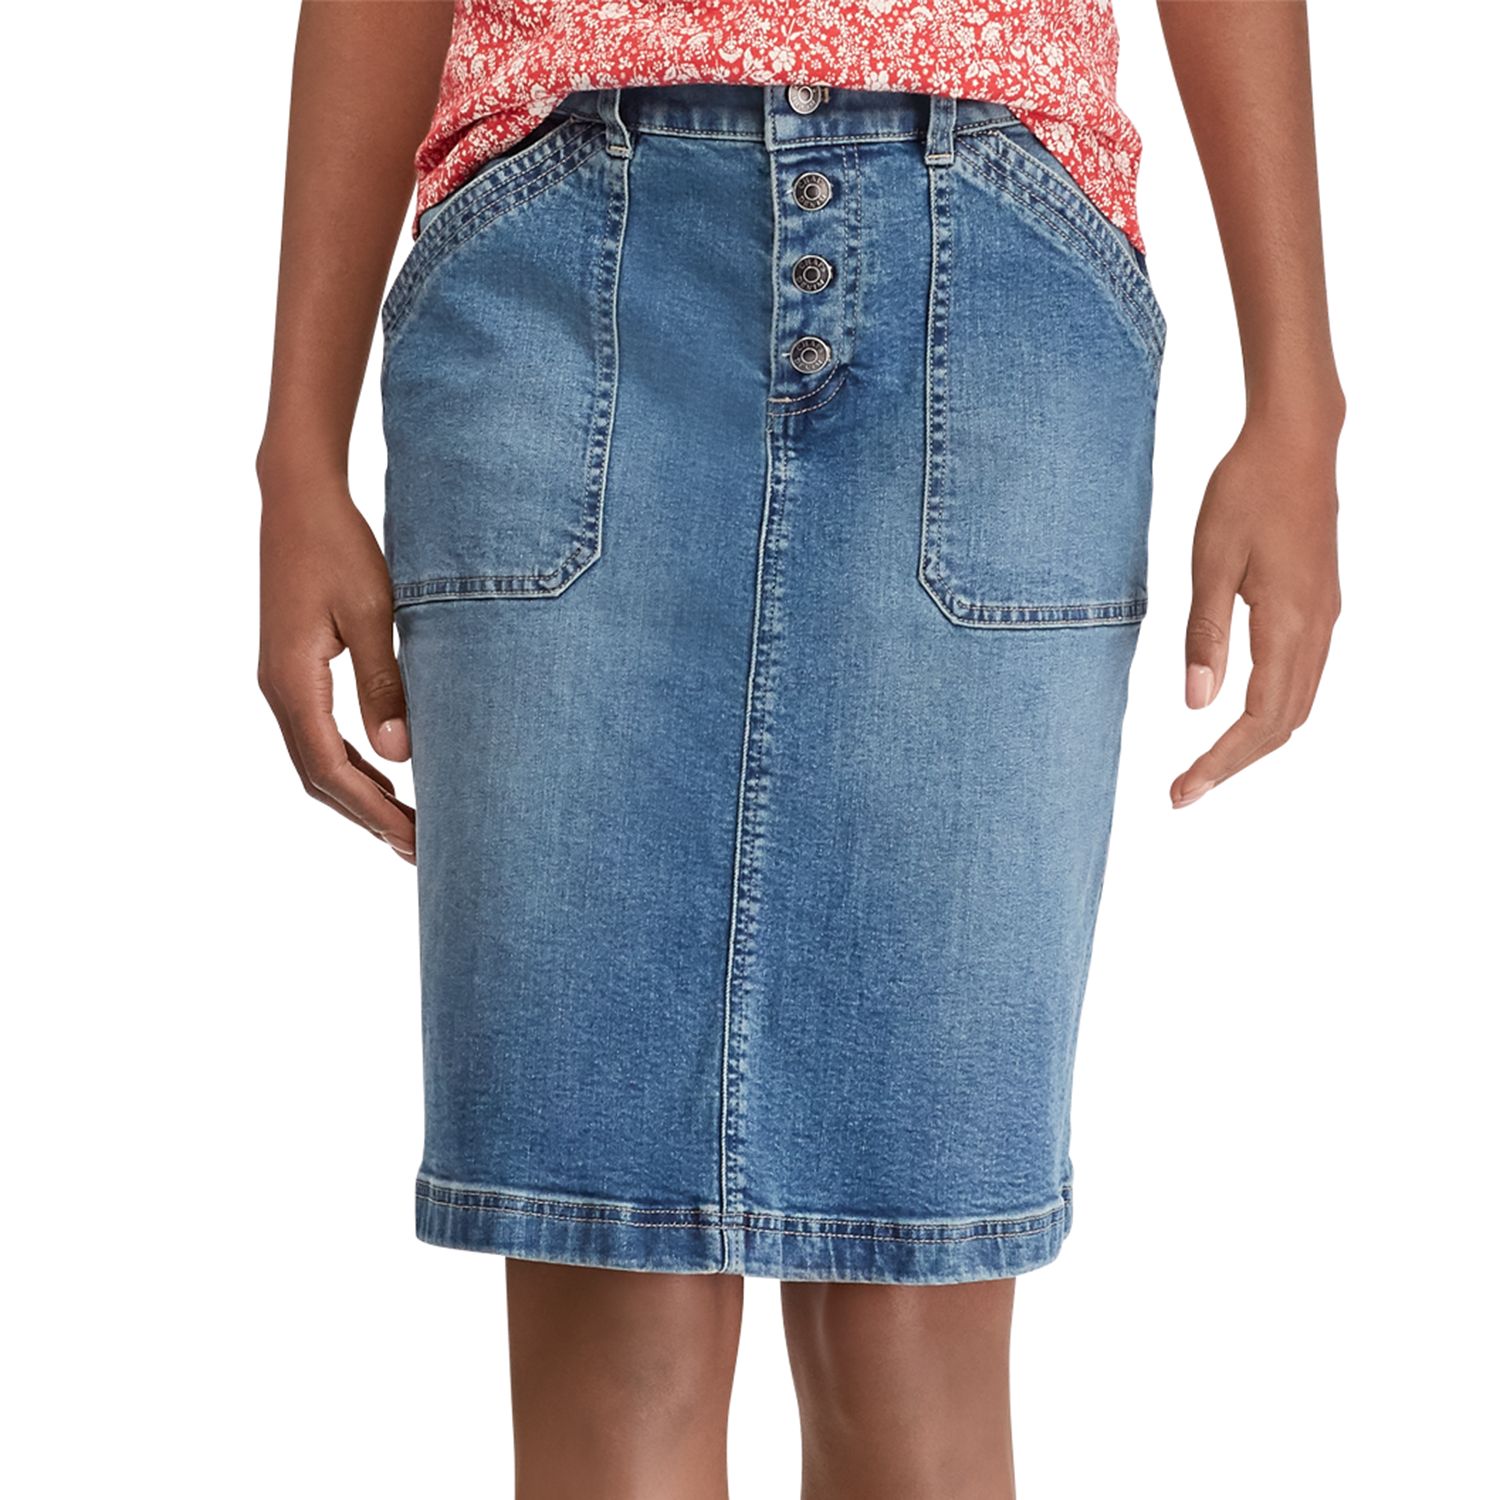 stretchy jean skirt